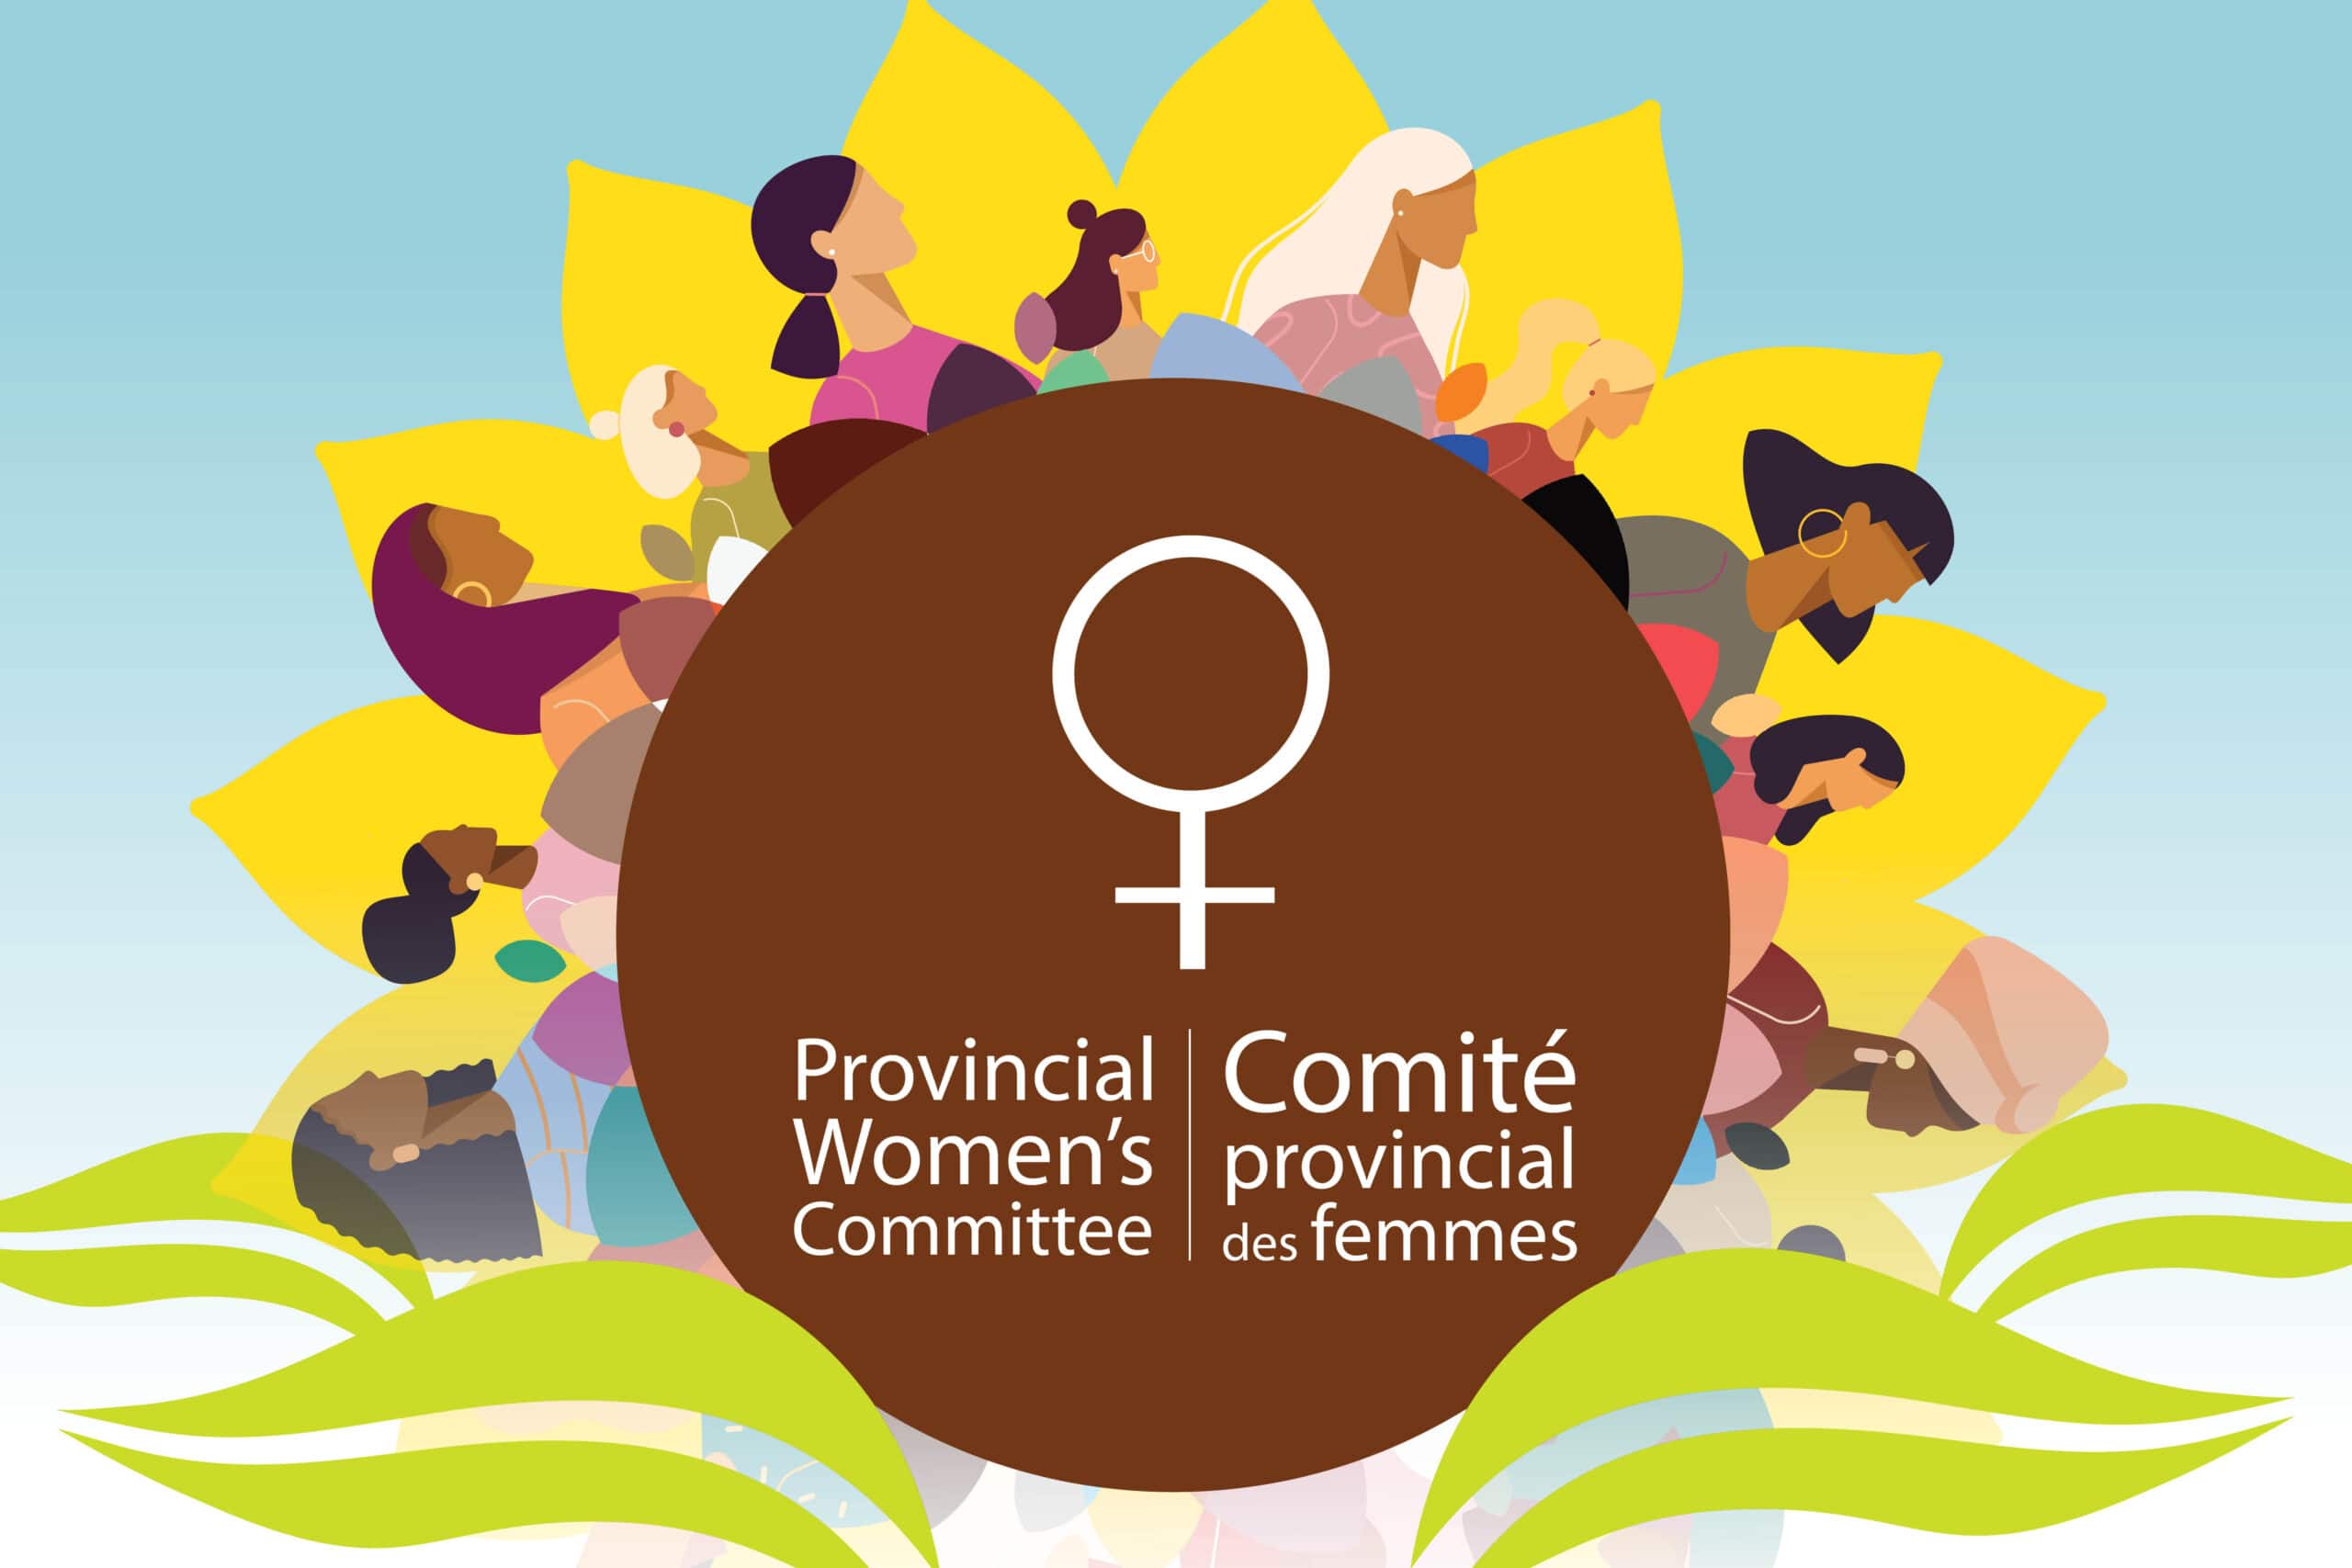 Provincial Women's Committee, Comite provincial des femmes